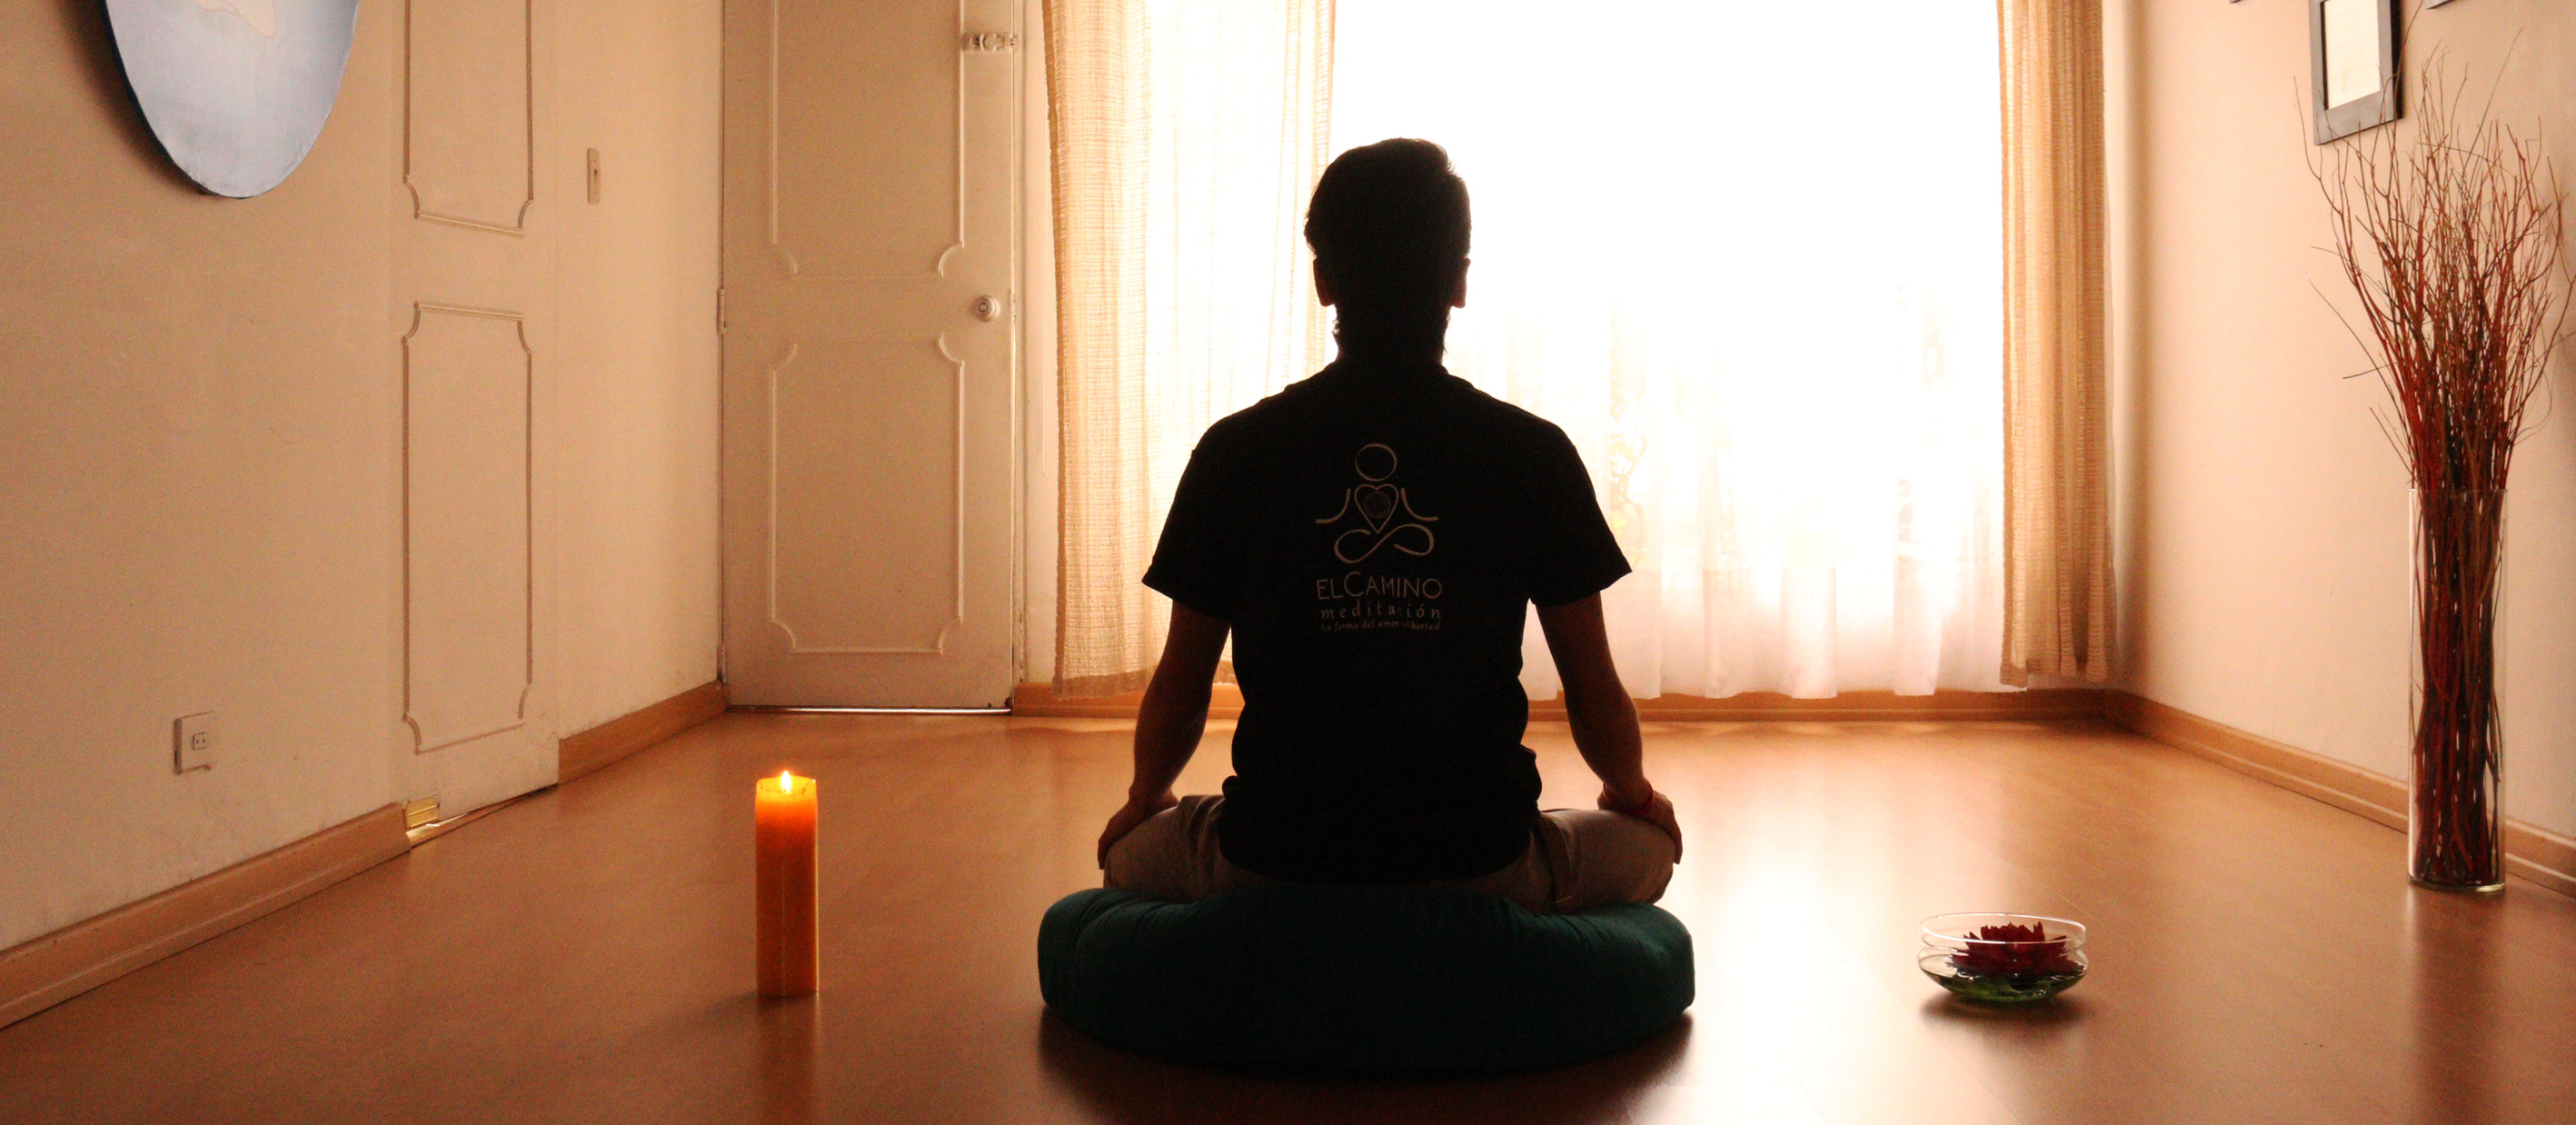 Meditation 1. Rick Lowe Meditation on social Sculpture+. 432 Hz Temple Bell Meditation – 30 minutes no t фото.